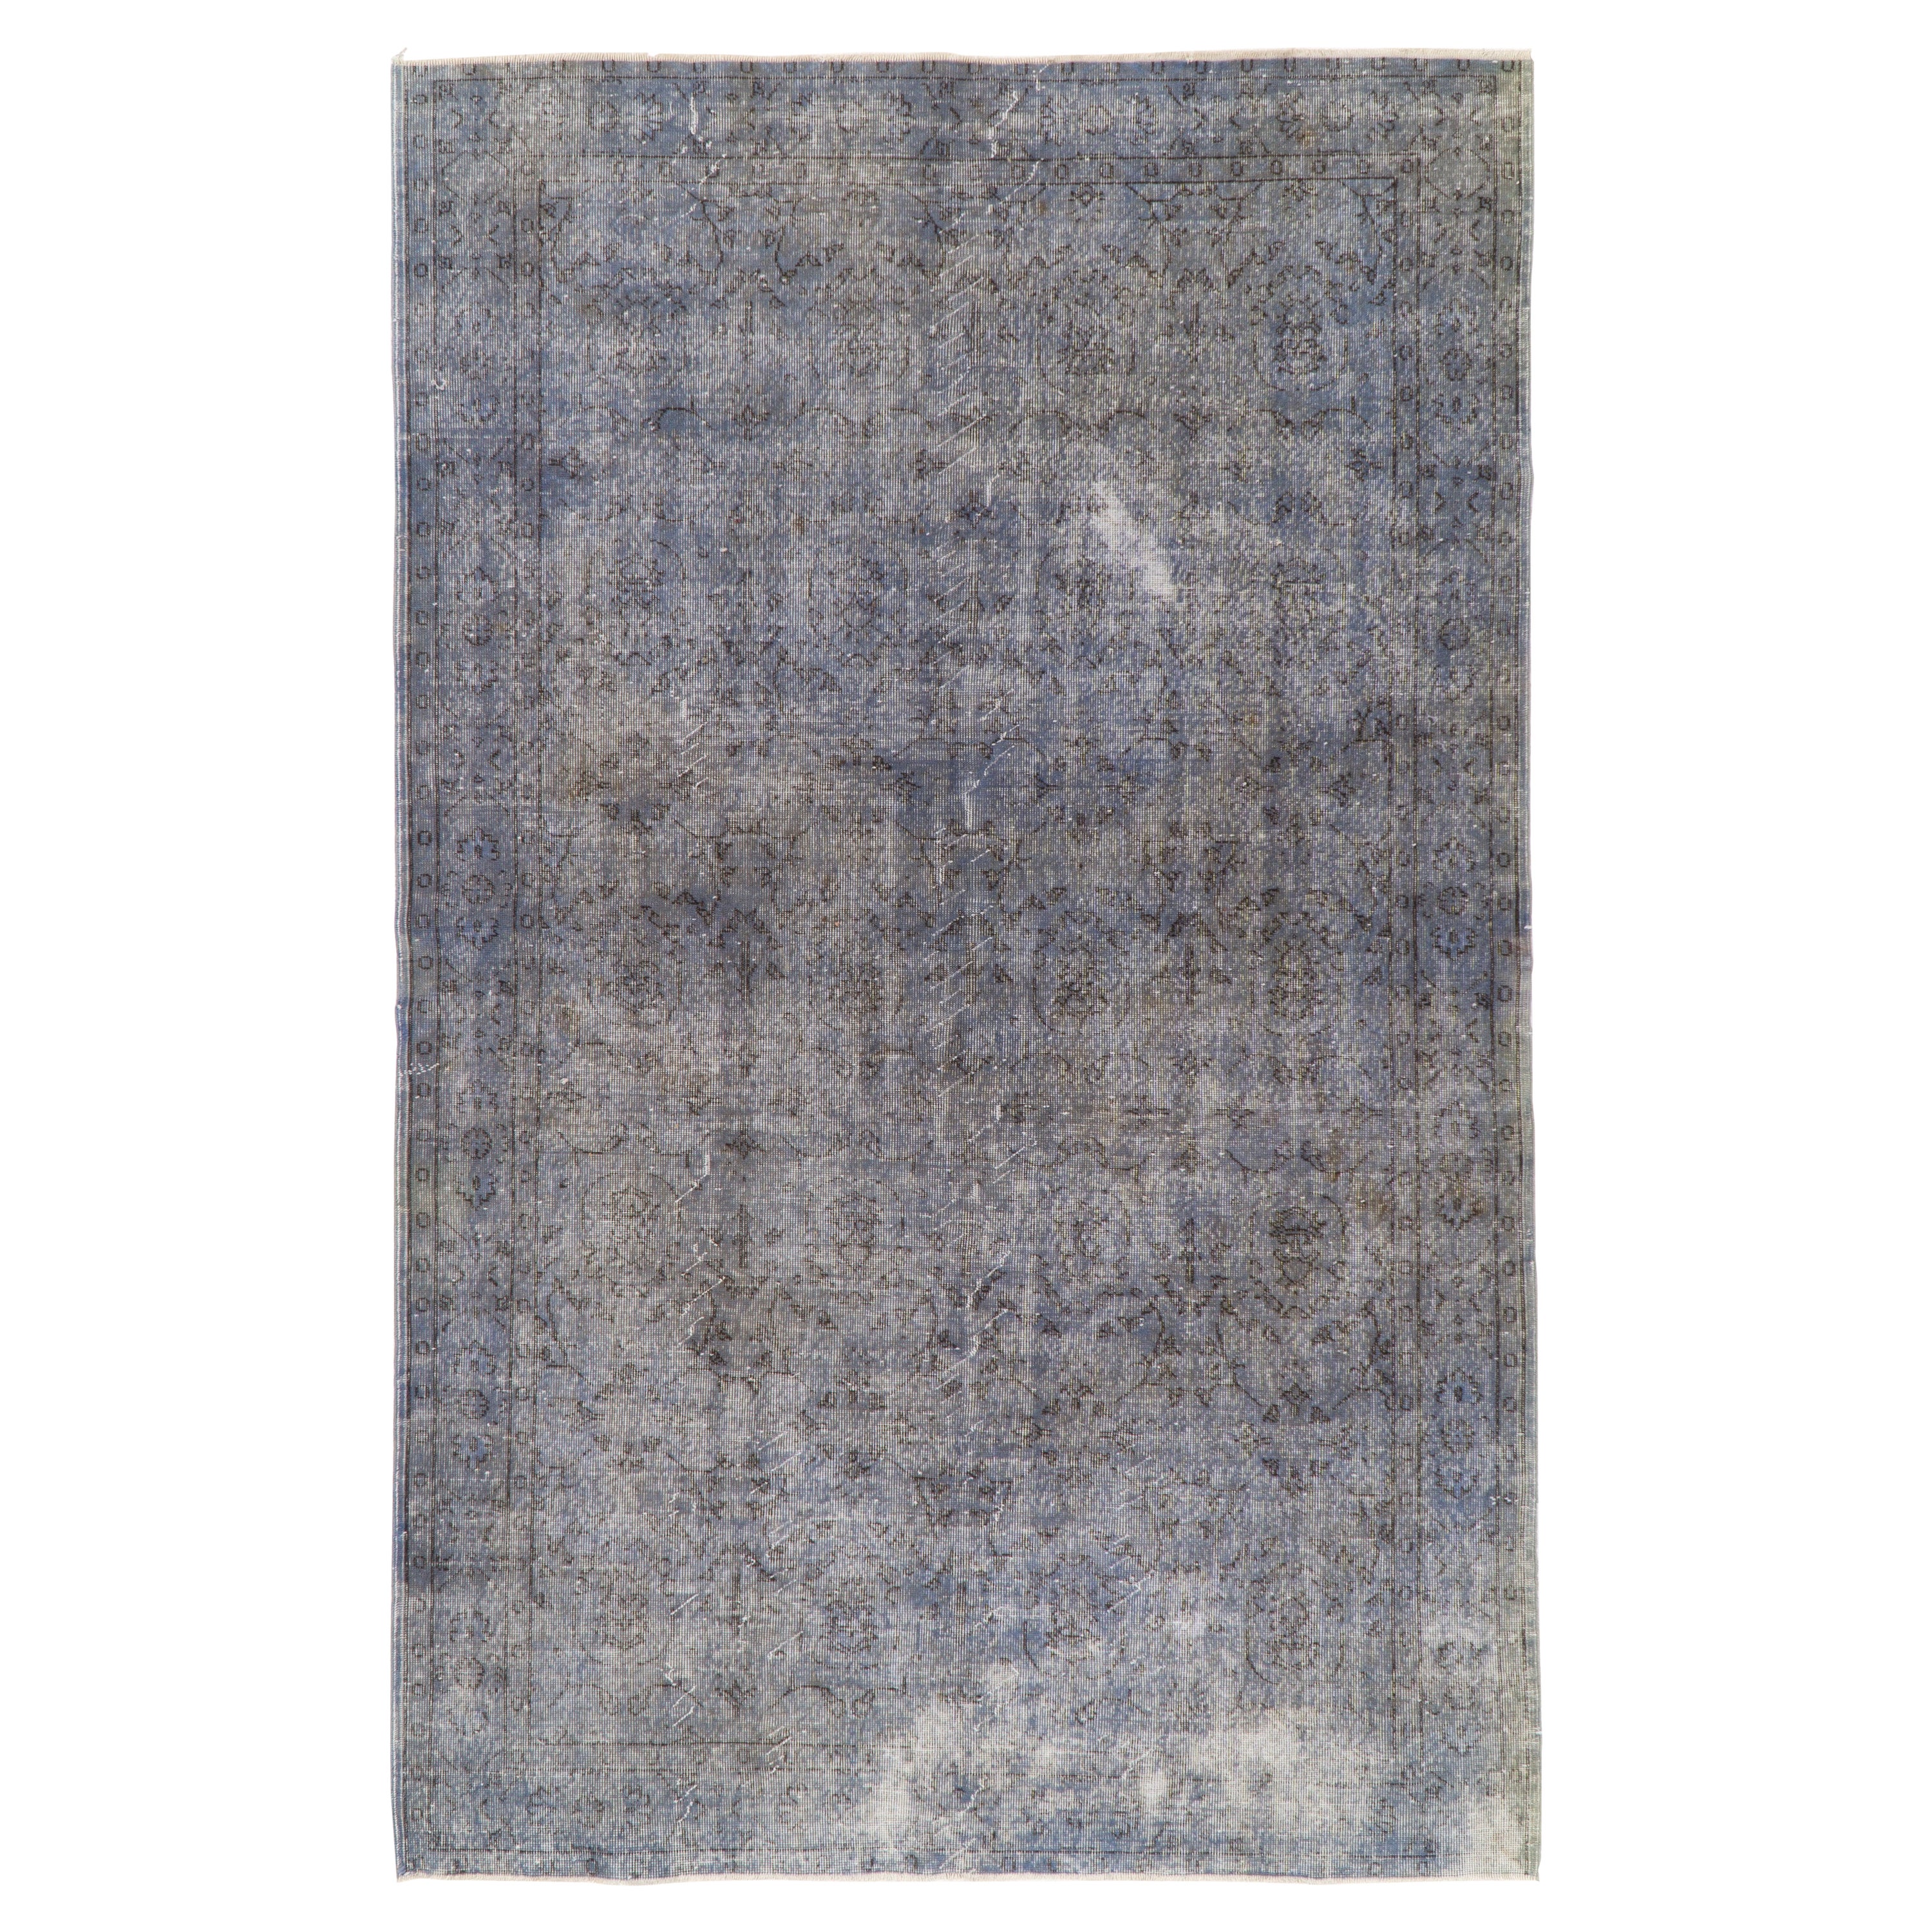 6.4x10.4 Ft Distressed Vintage Turkish Area Rug, Contemporary Light Blue Carpet